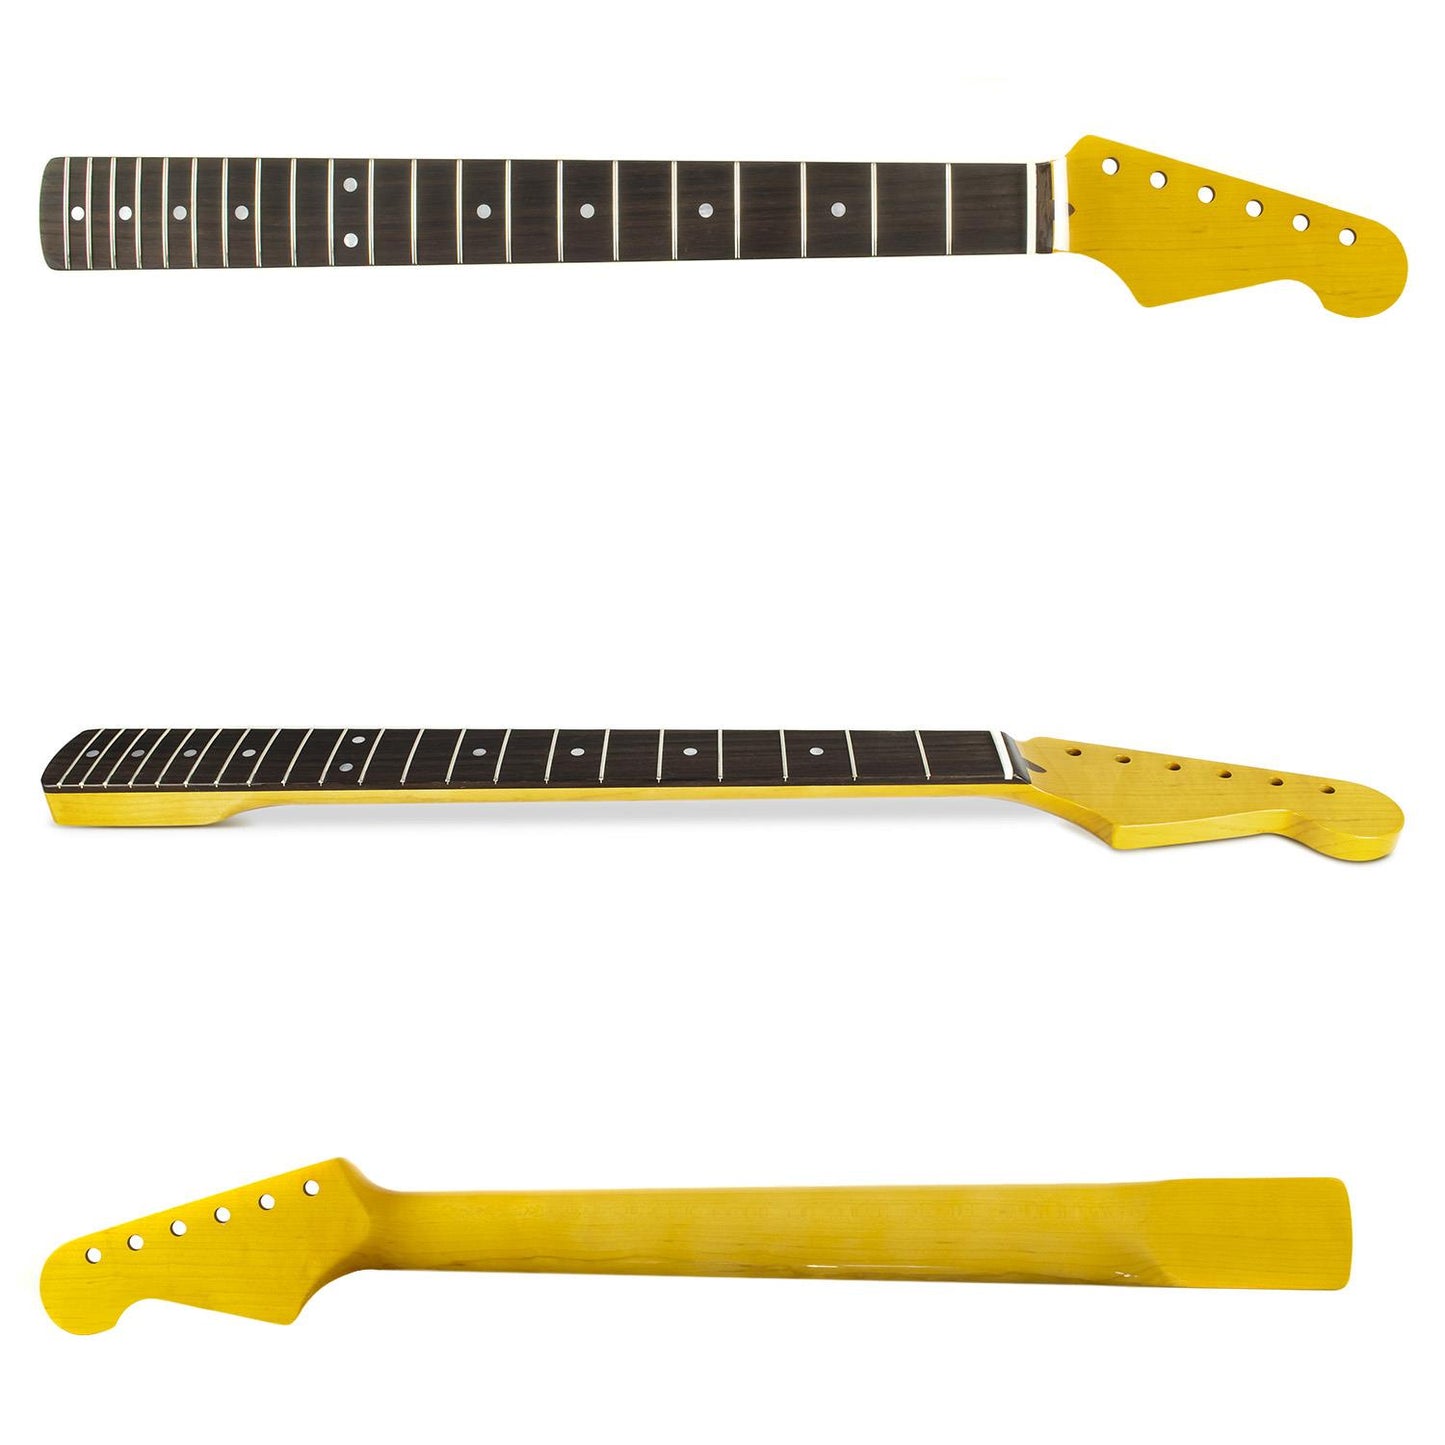 Stratocaster Compatible Guitar Neck -  SRV Compatible